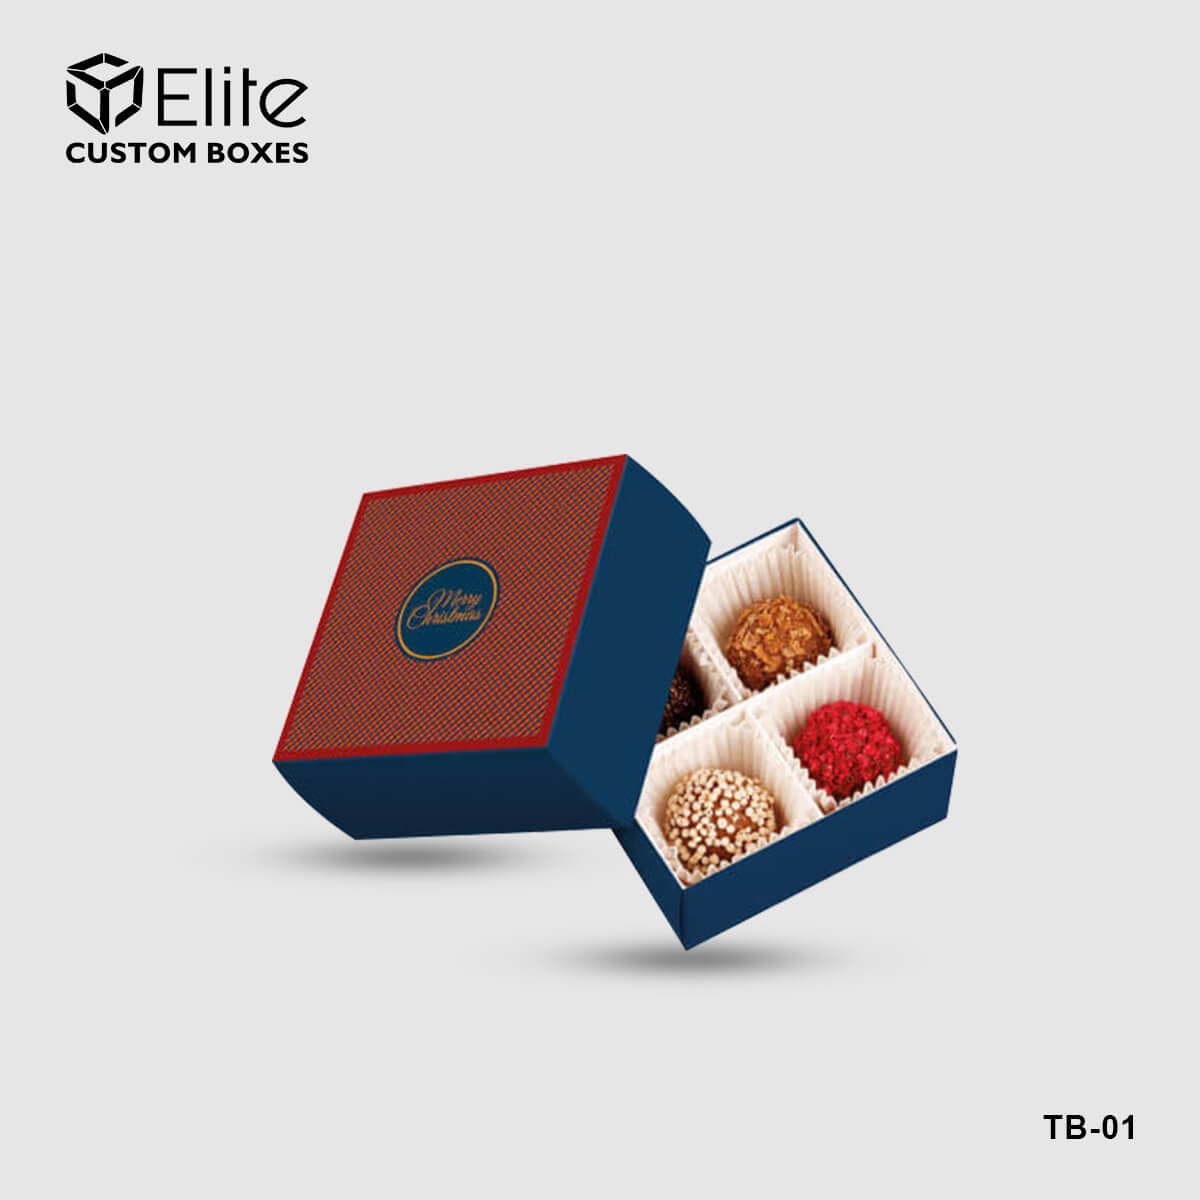 truffle-boxes